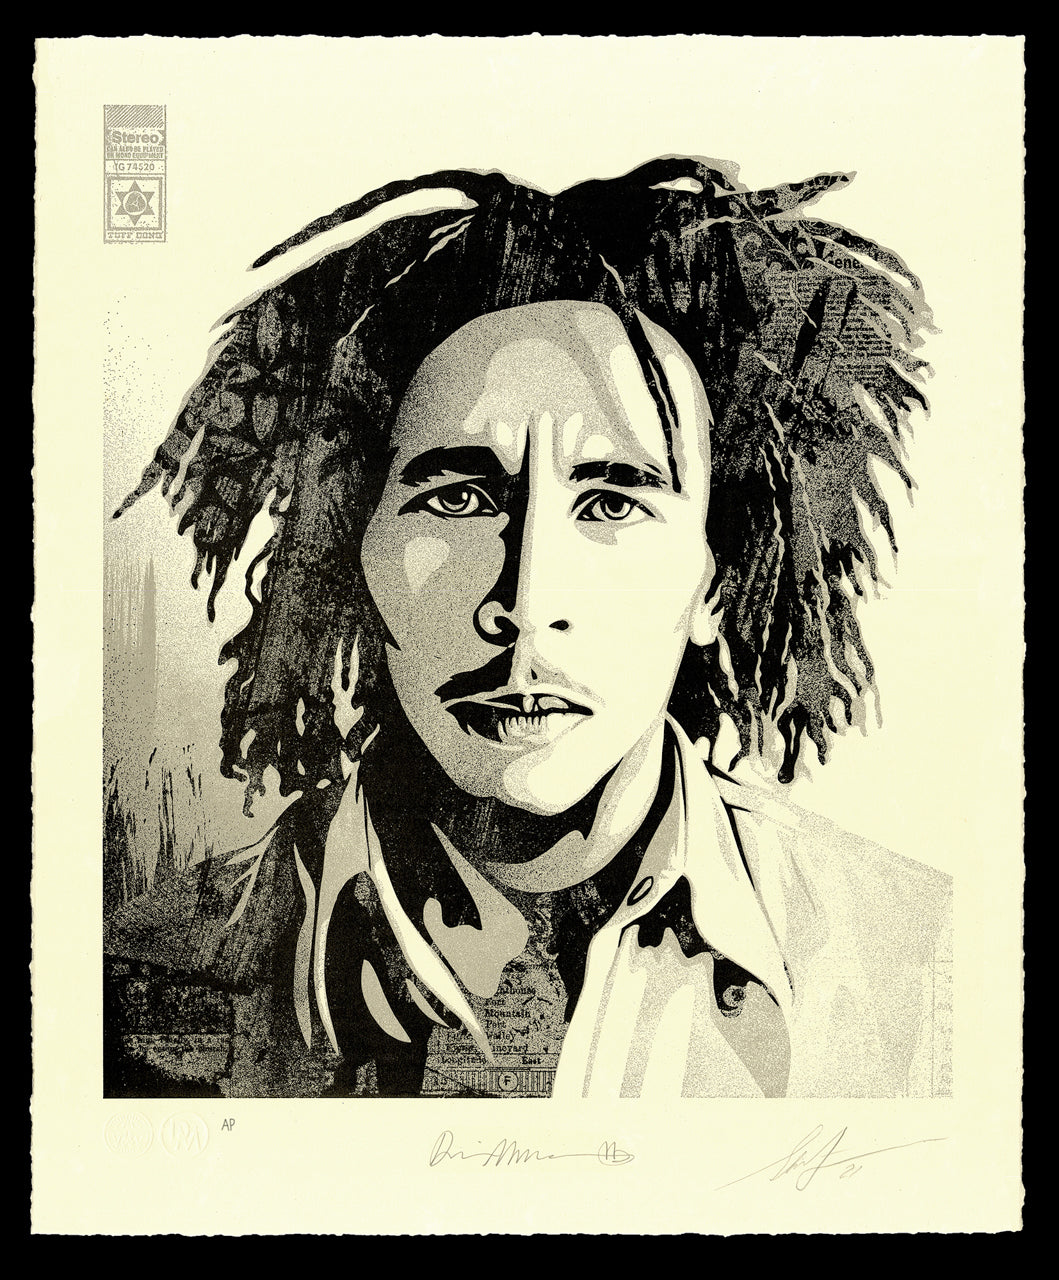 Bob Marley 40th Letterpress: Confrontation